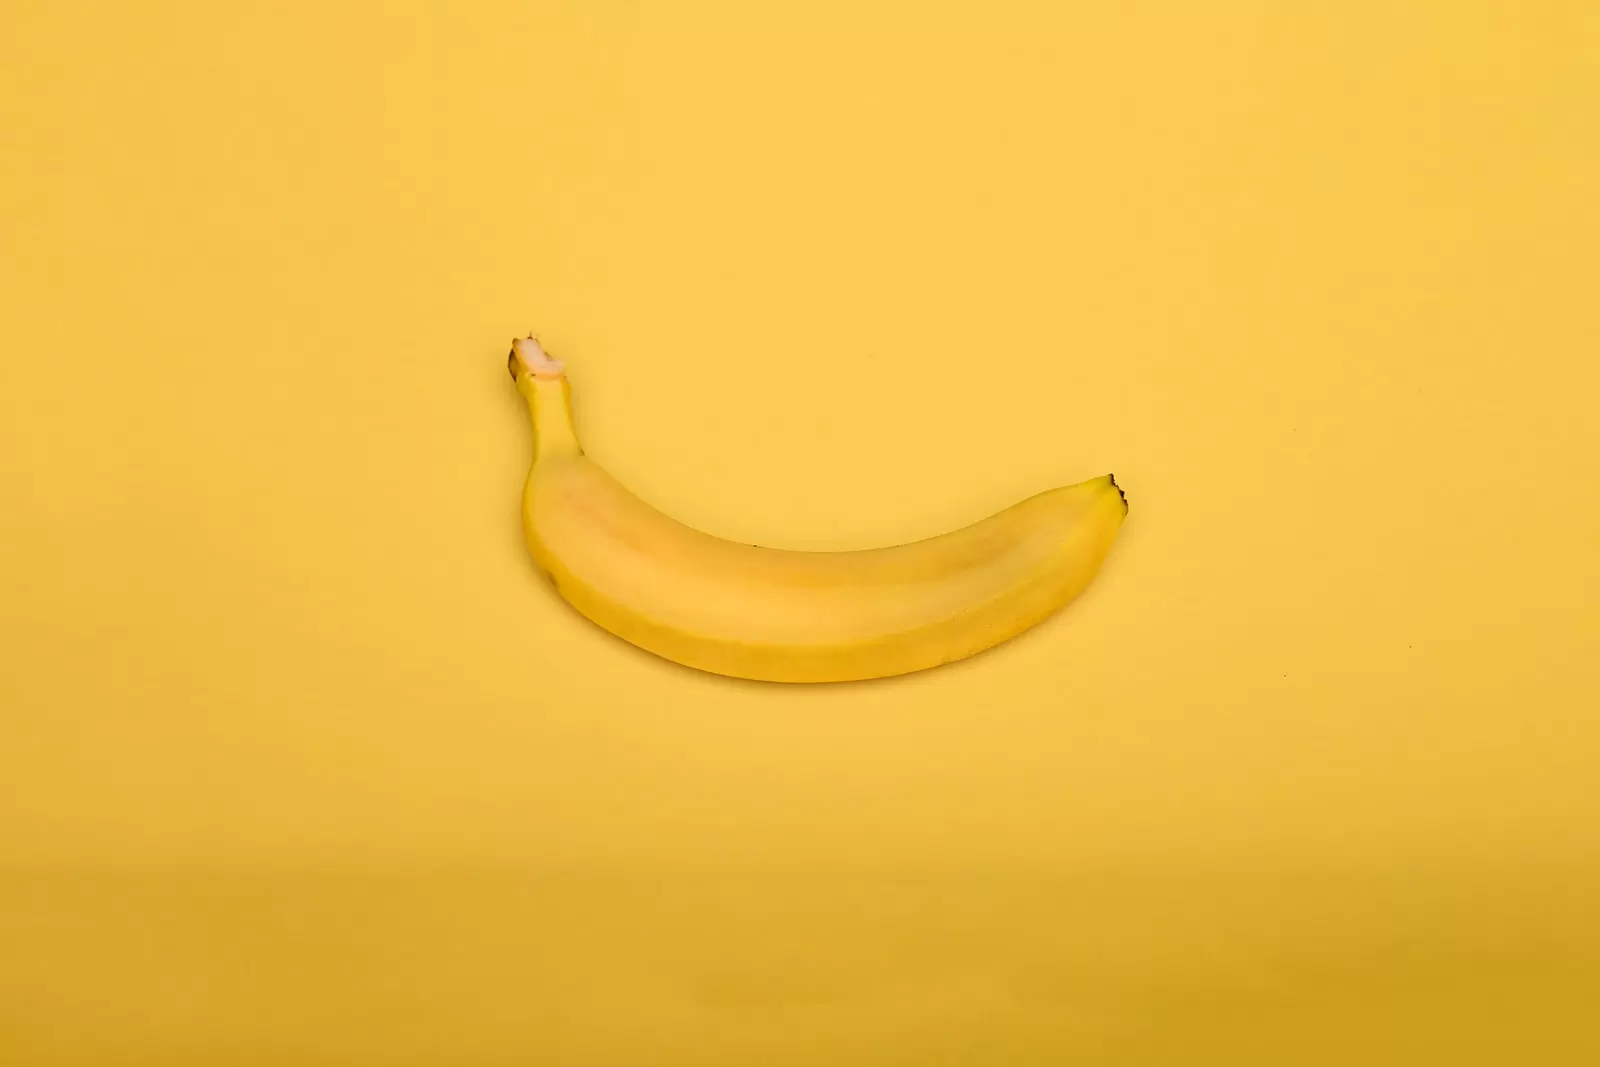 yellow banana on yellow surface